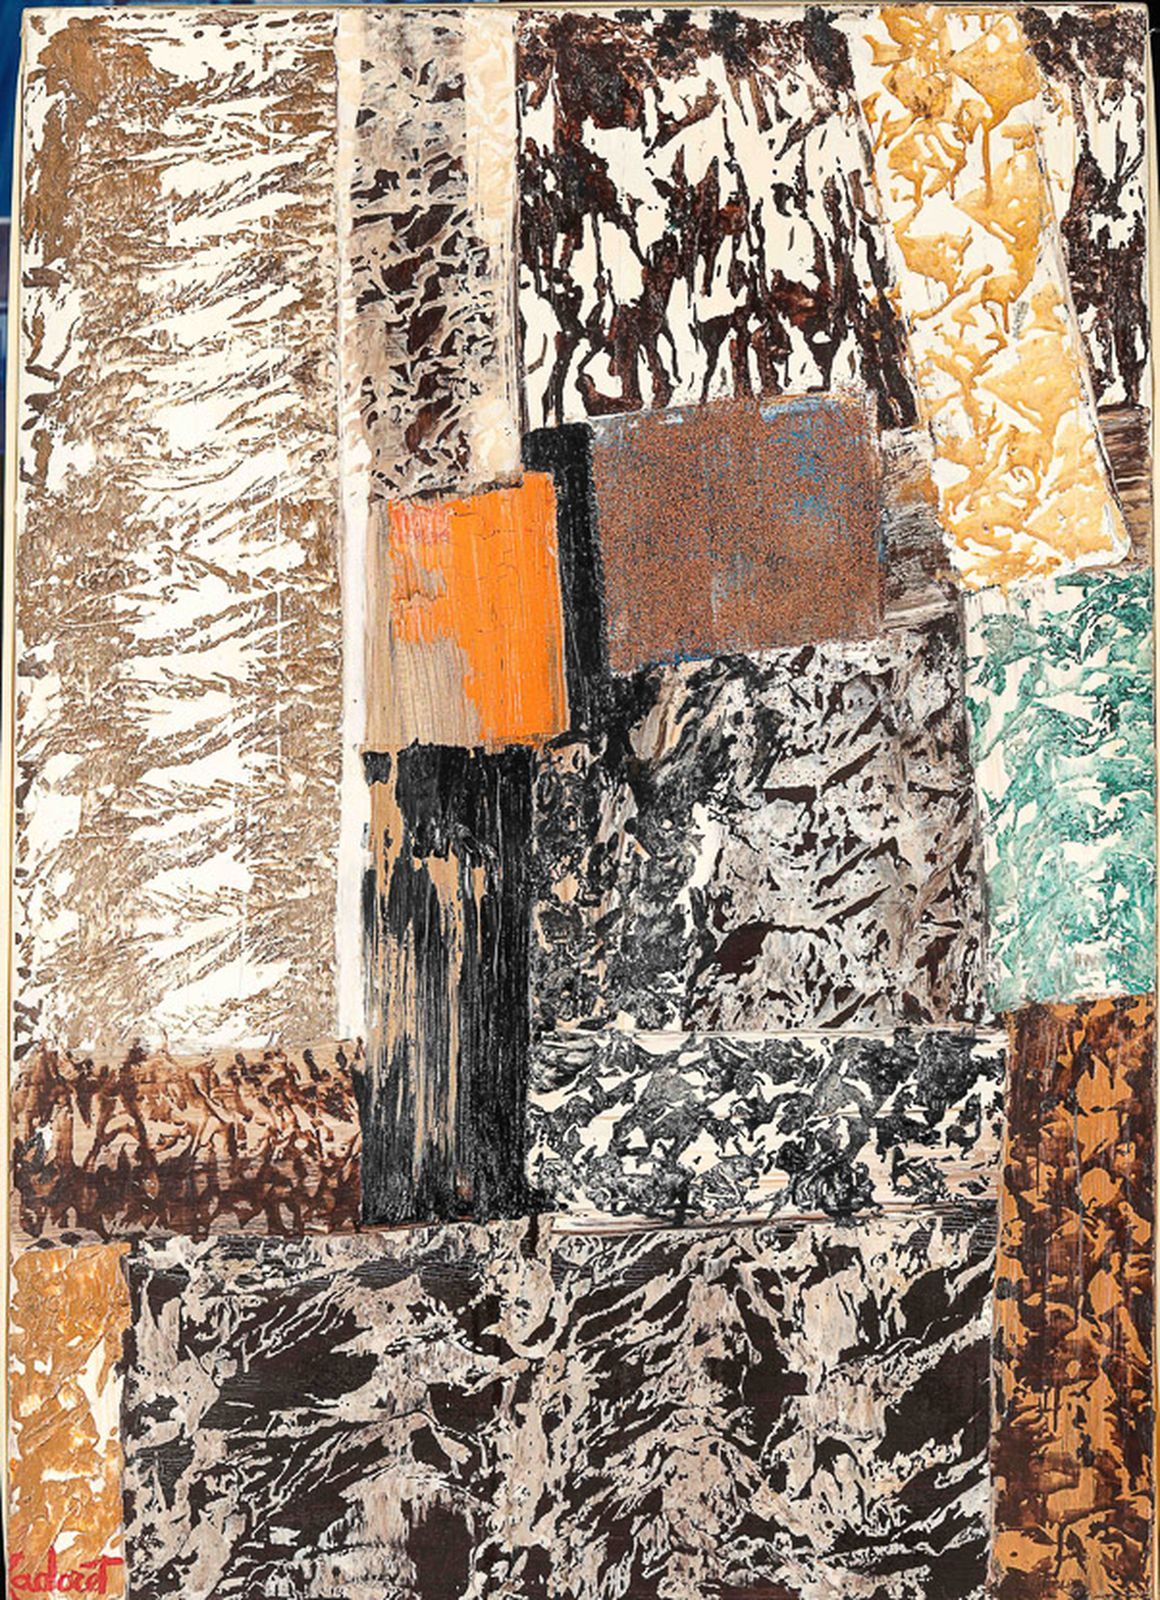 Null 
米歇尔-卡多雷(1912-1985)
"Janville", 1975年
丙烯酸、沙子和混合技法画布，左下角有签名
92 x 65 cm